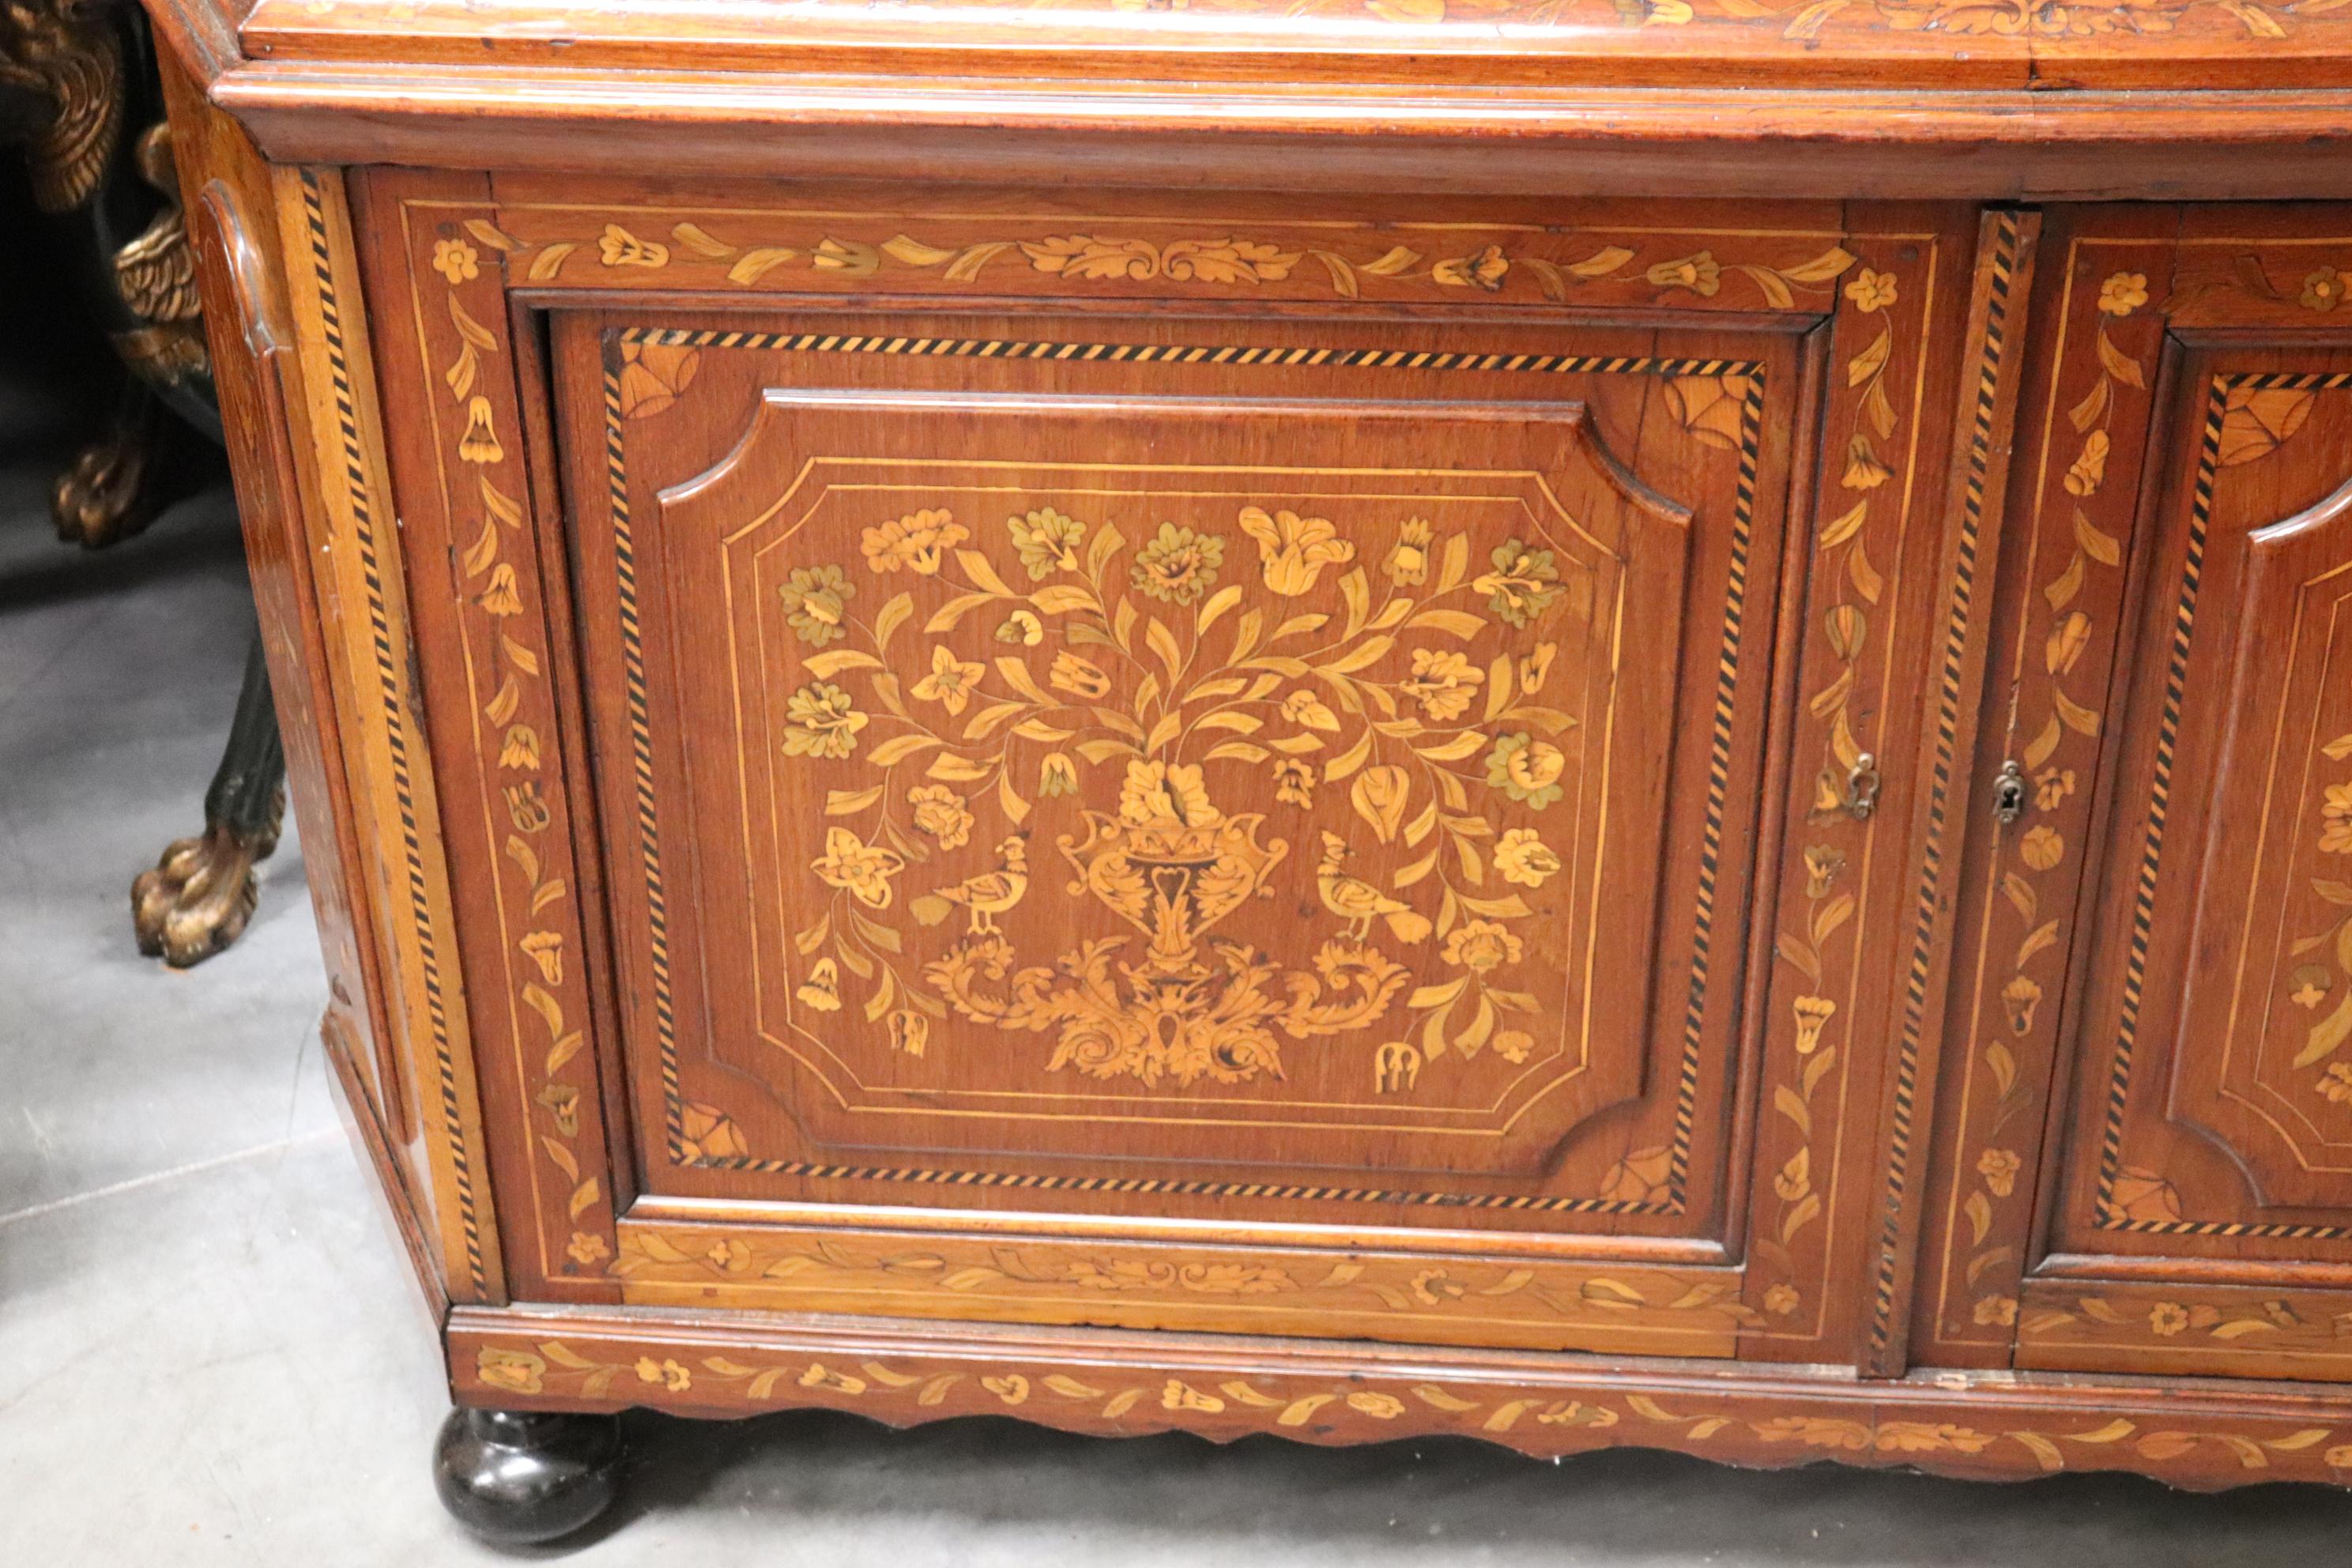 Tulipwood Rare Flemish Dutch Marquetry Inlaid China Cabinet Bookcase Vitrine, Circa 1820s